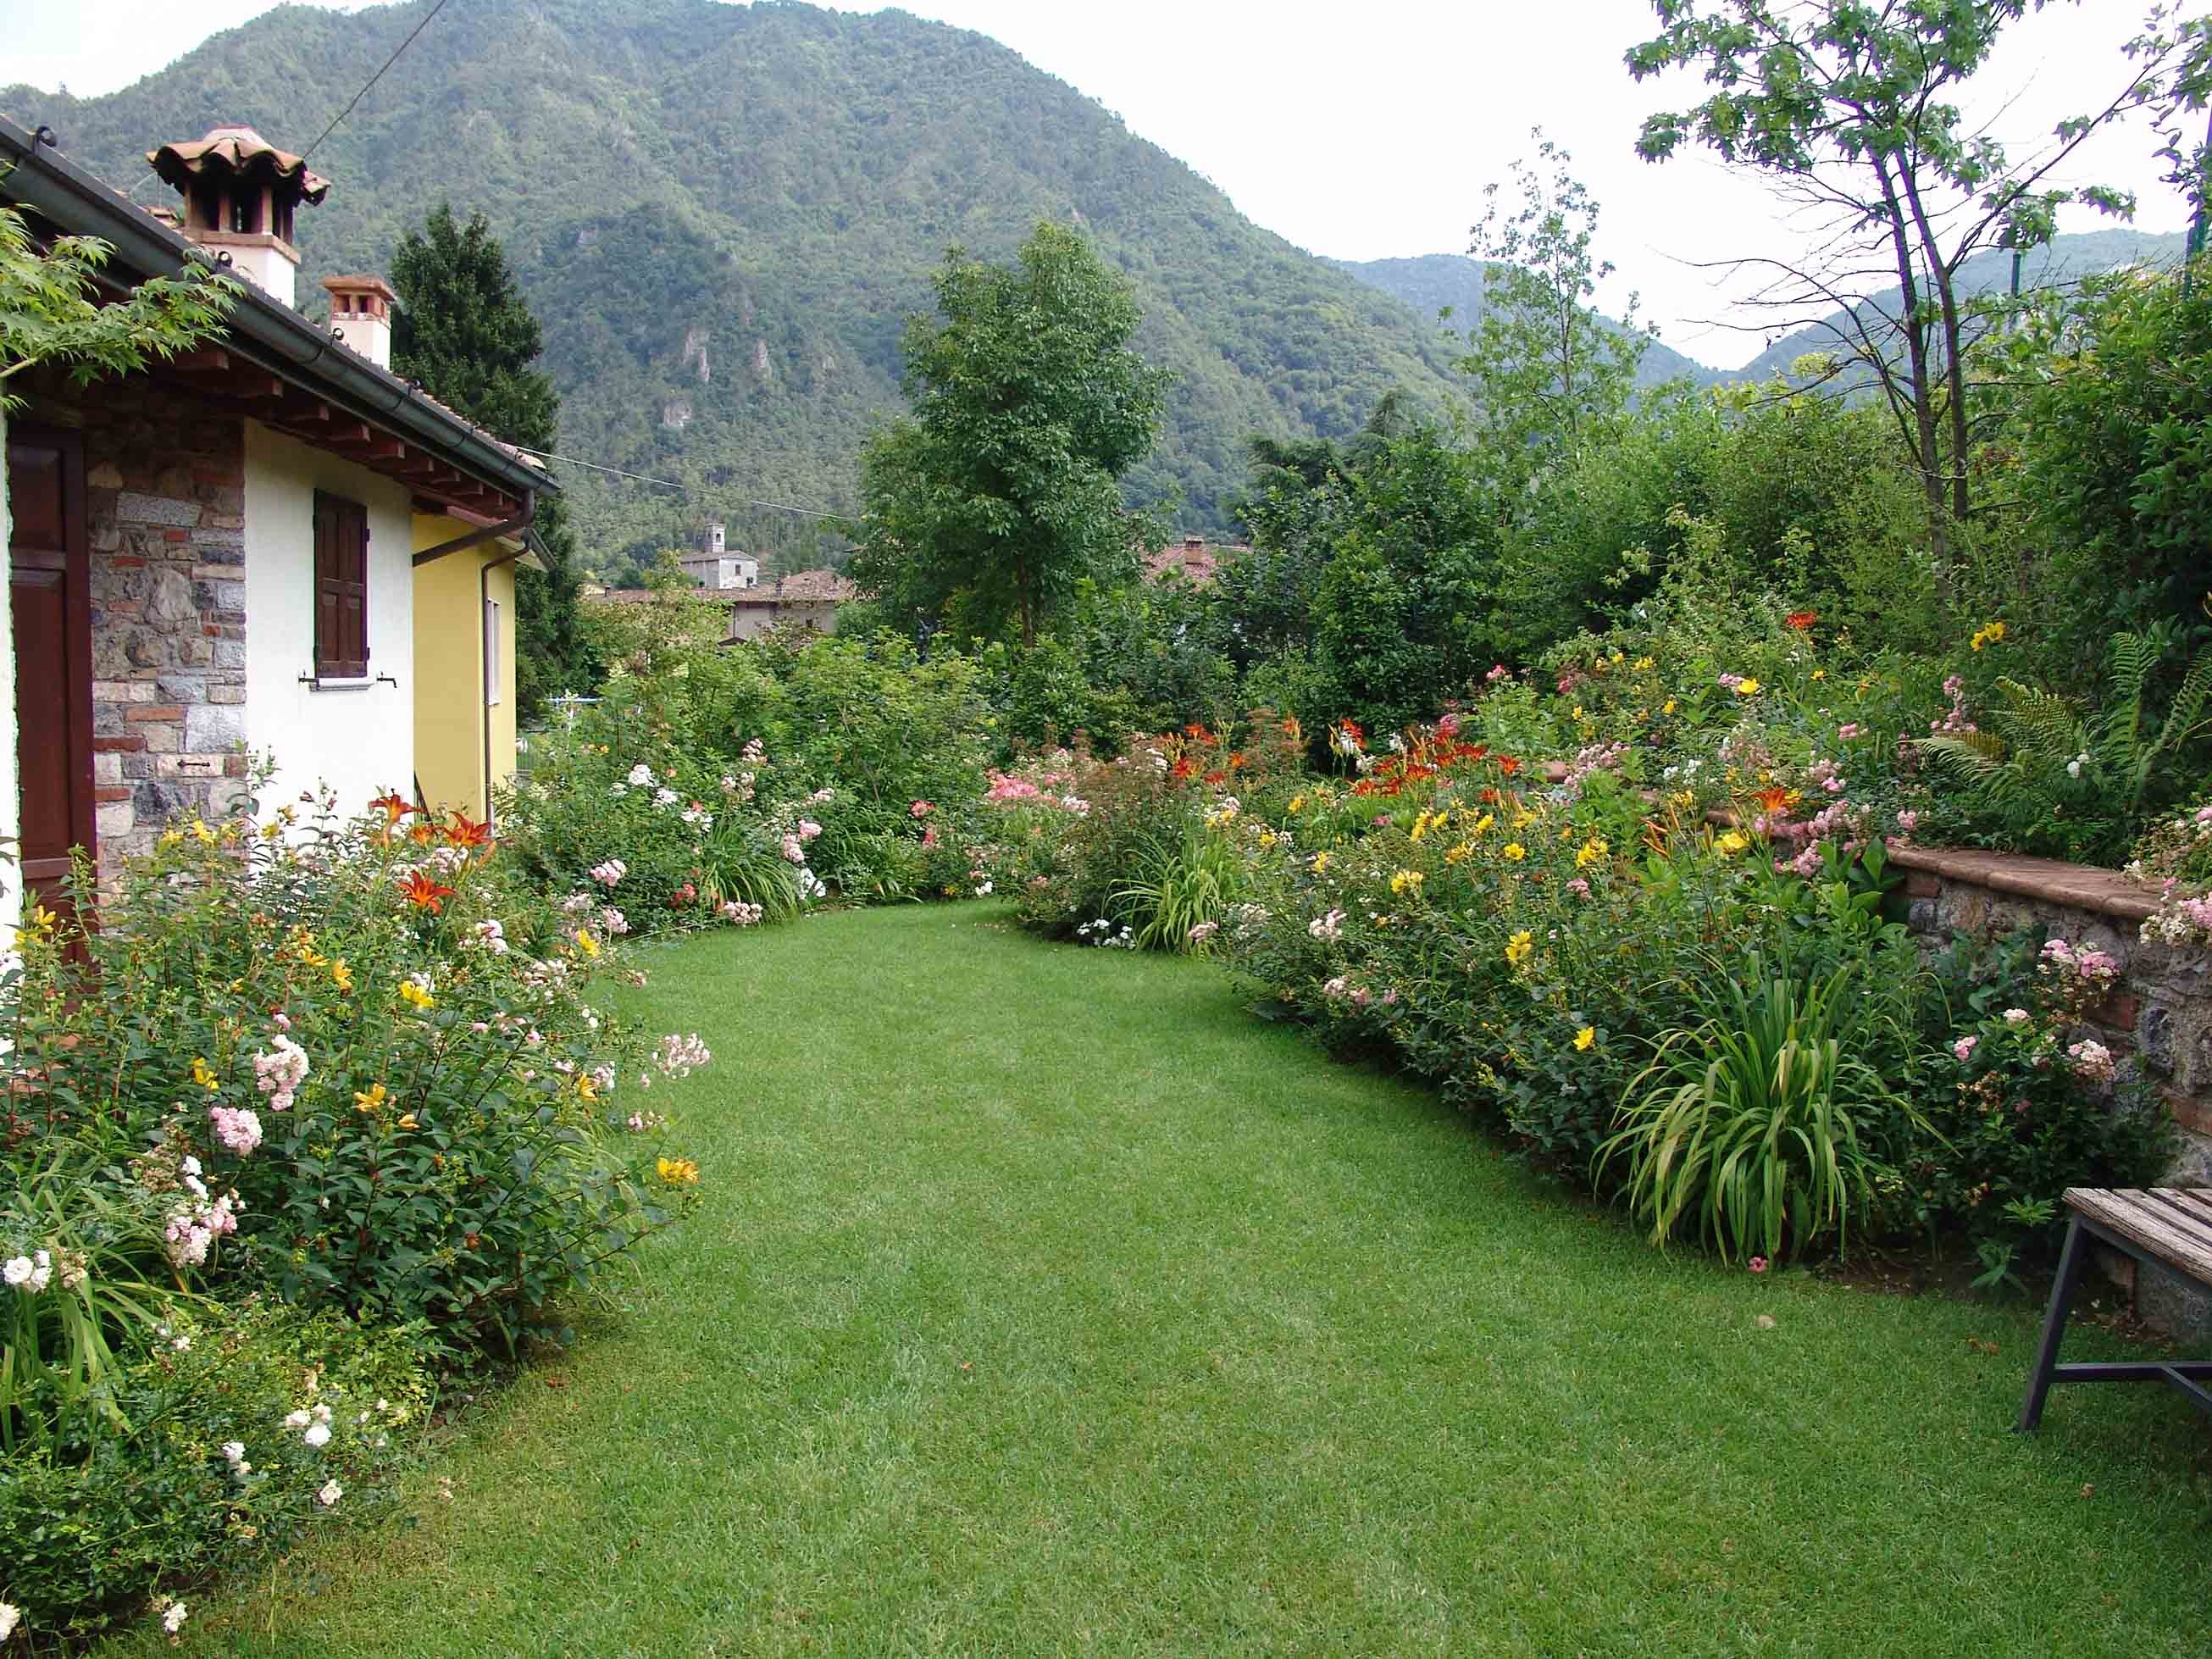 A small garden with vibrant colors - الحدائق